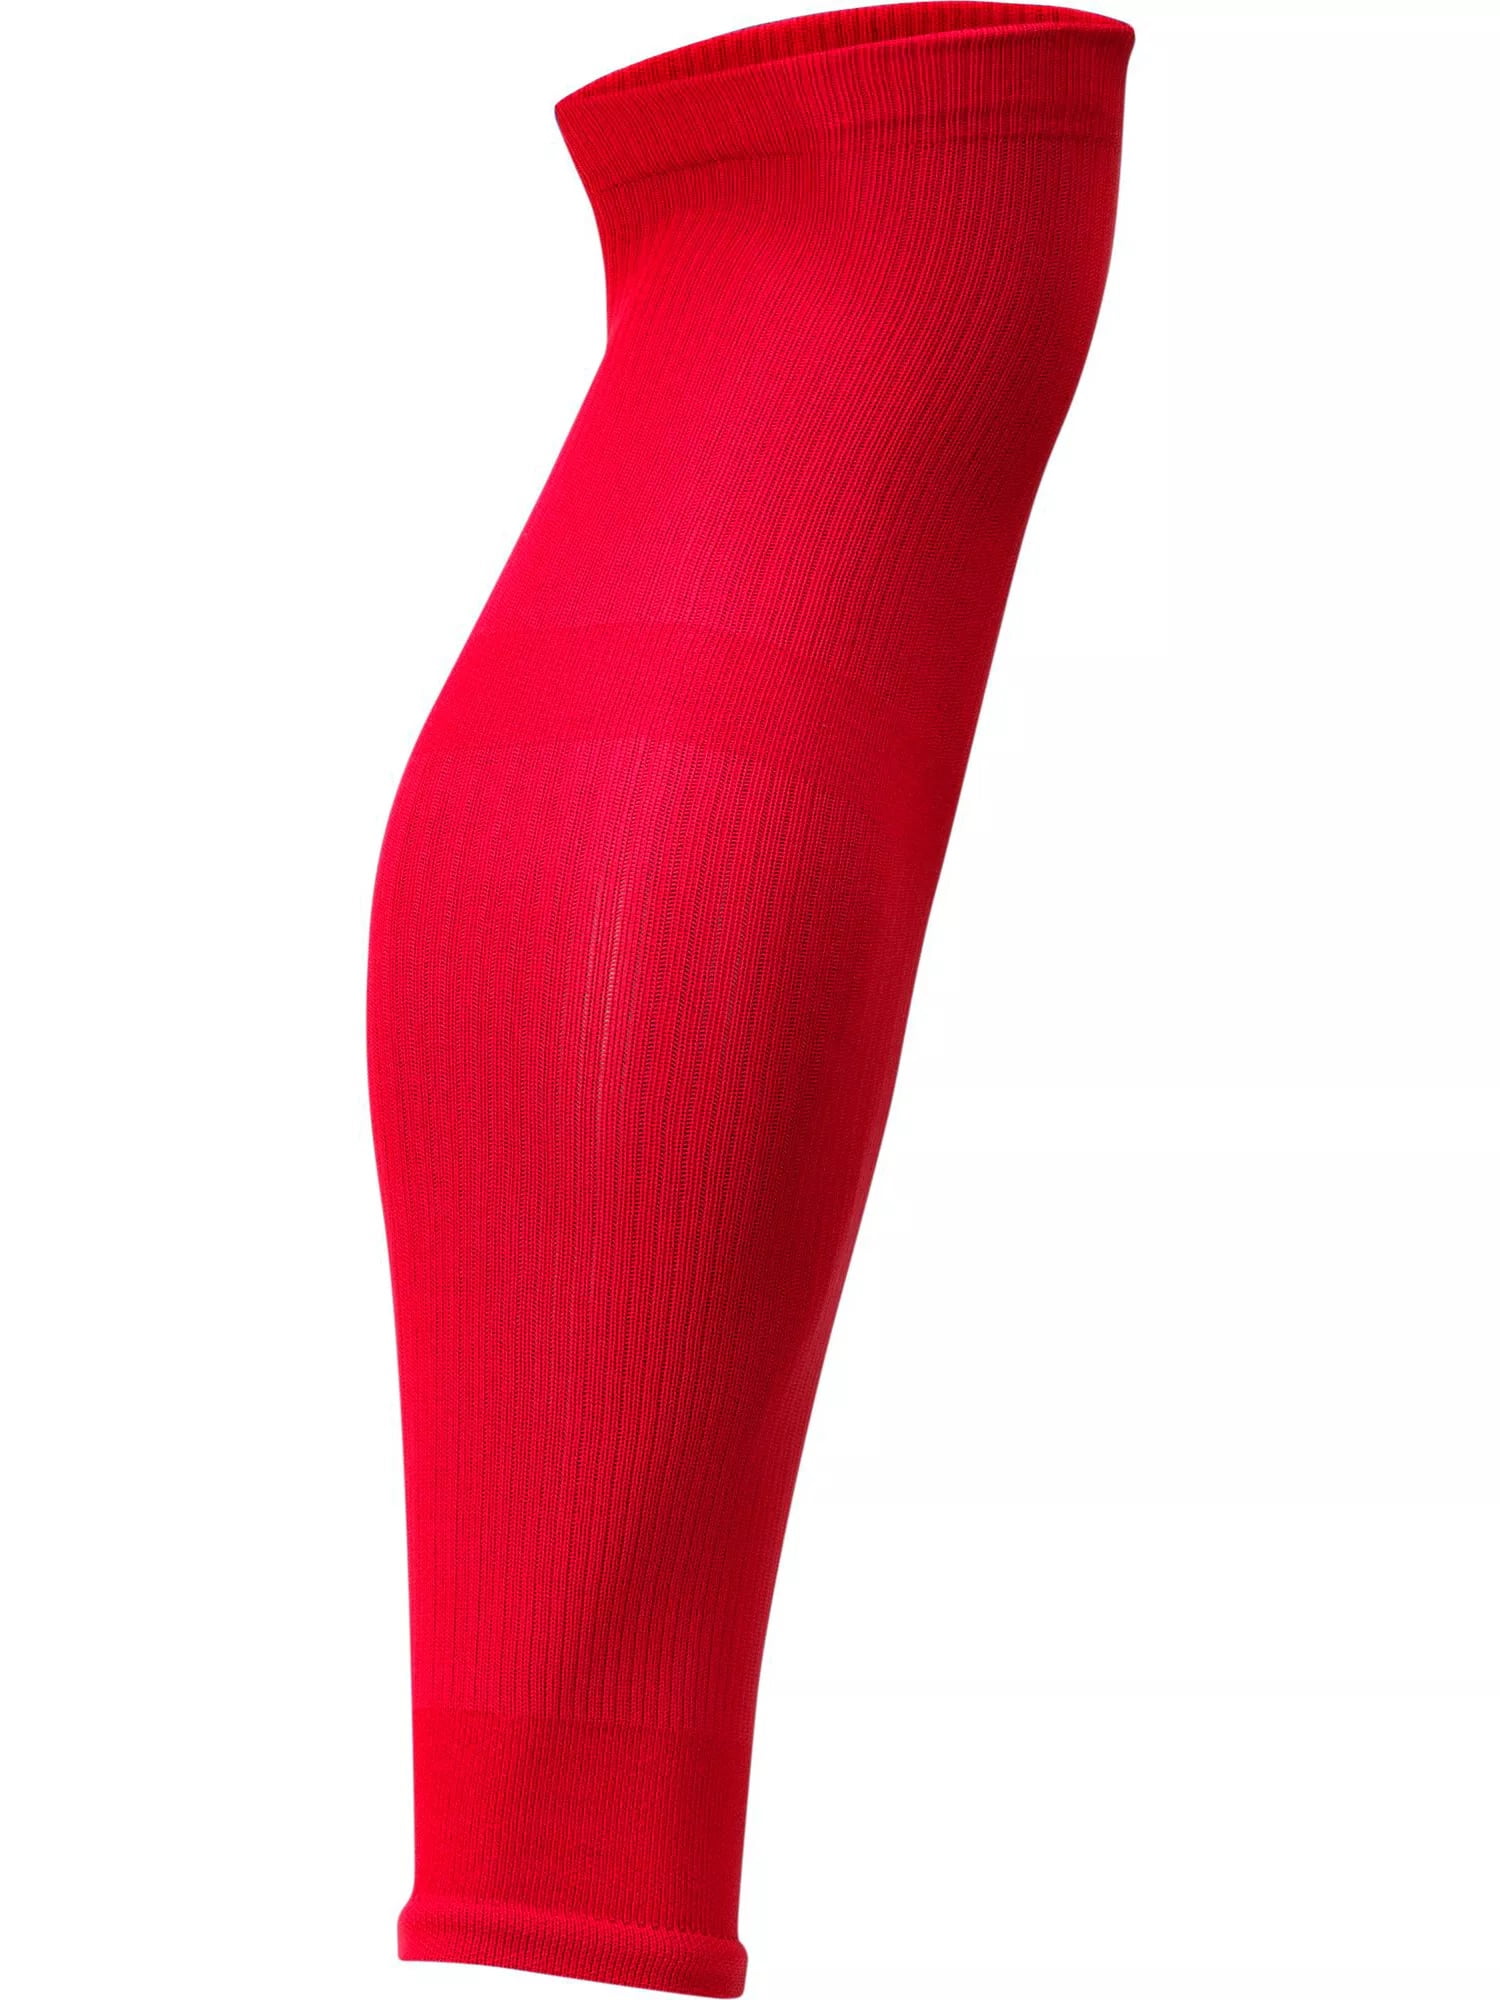 Nike Leg Sleeve-L/XL-Red - Walmart.com